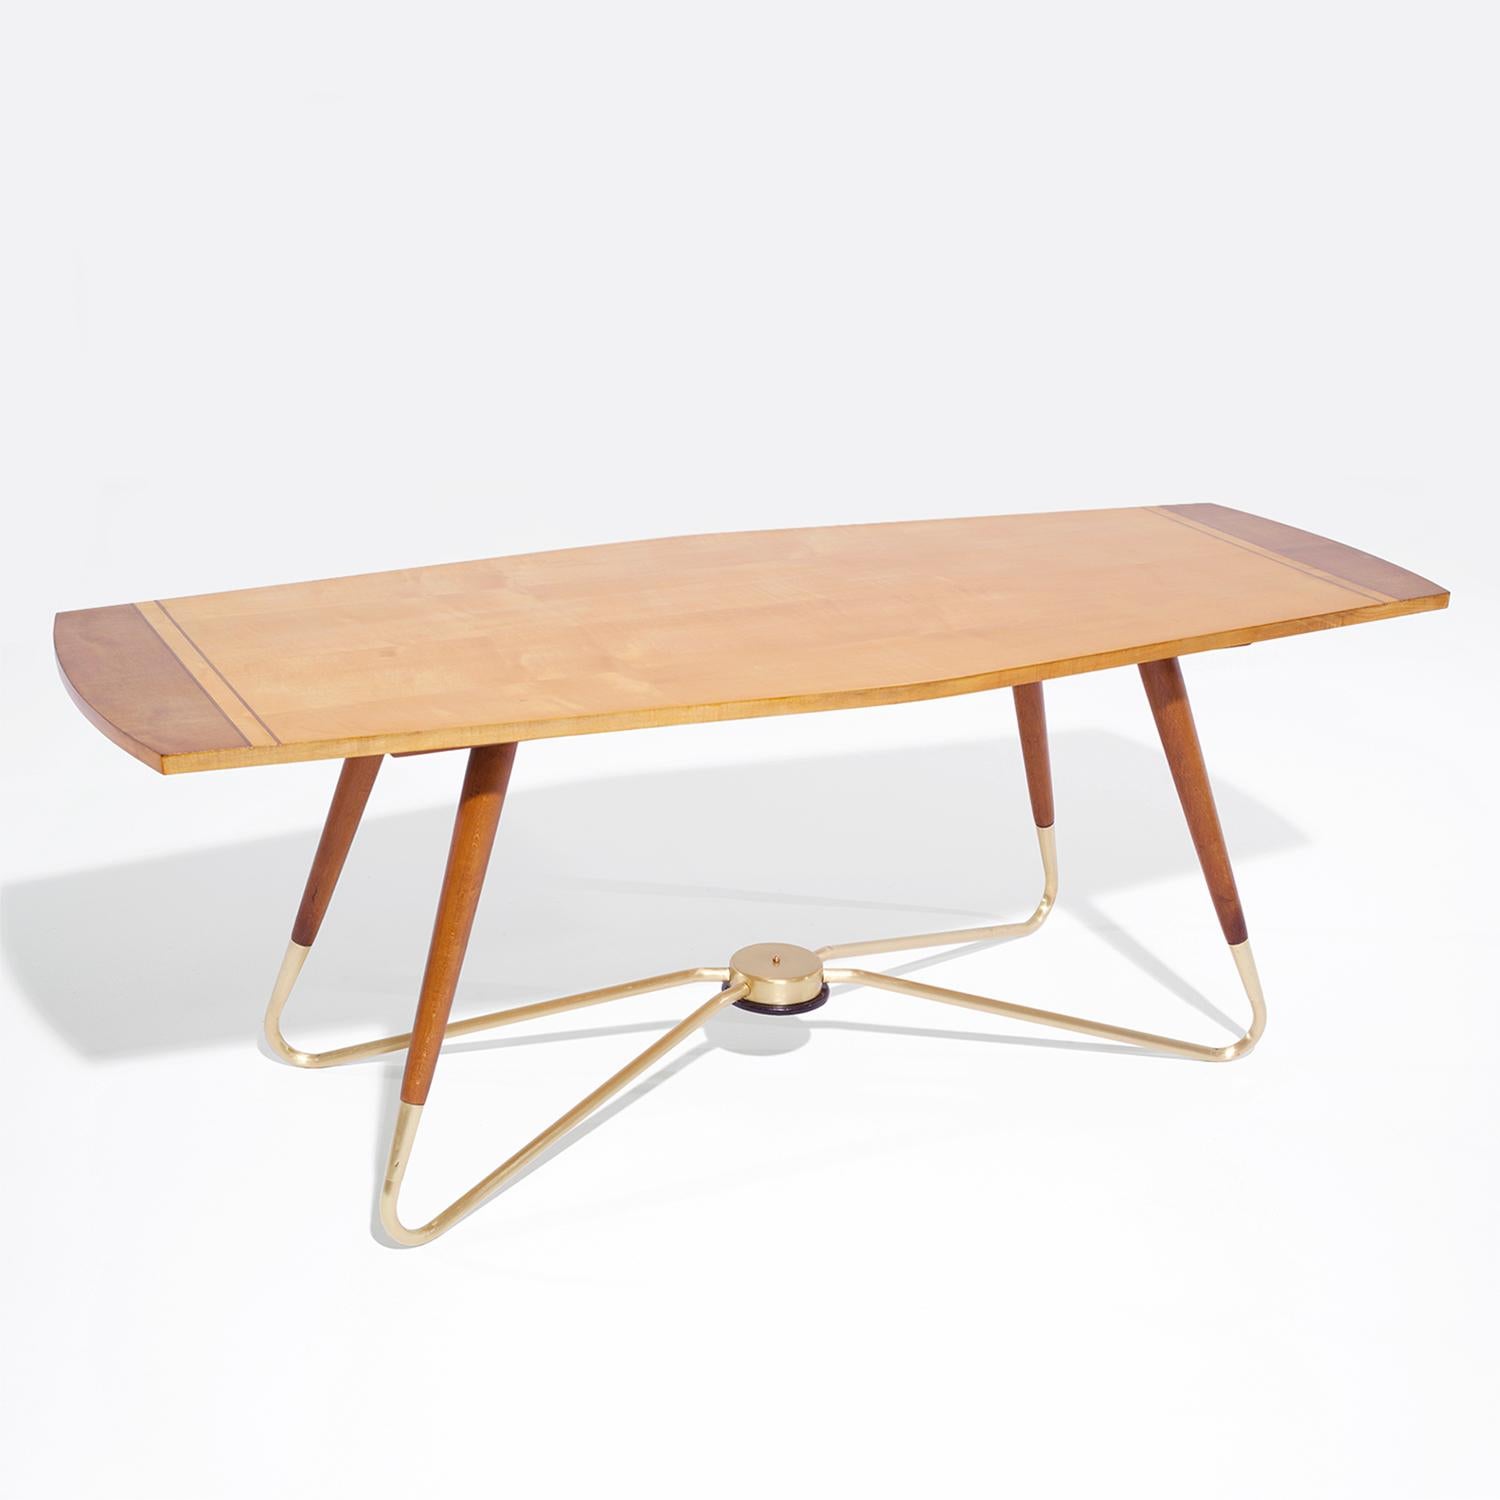 Metal 20th Century German Modern Maplewood Coffee Table - Sofa Table by Ilse Möbel For Sale